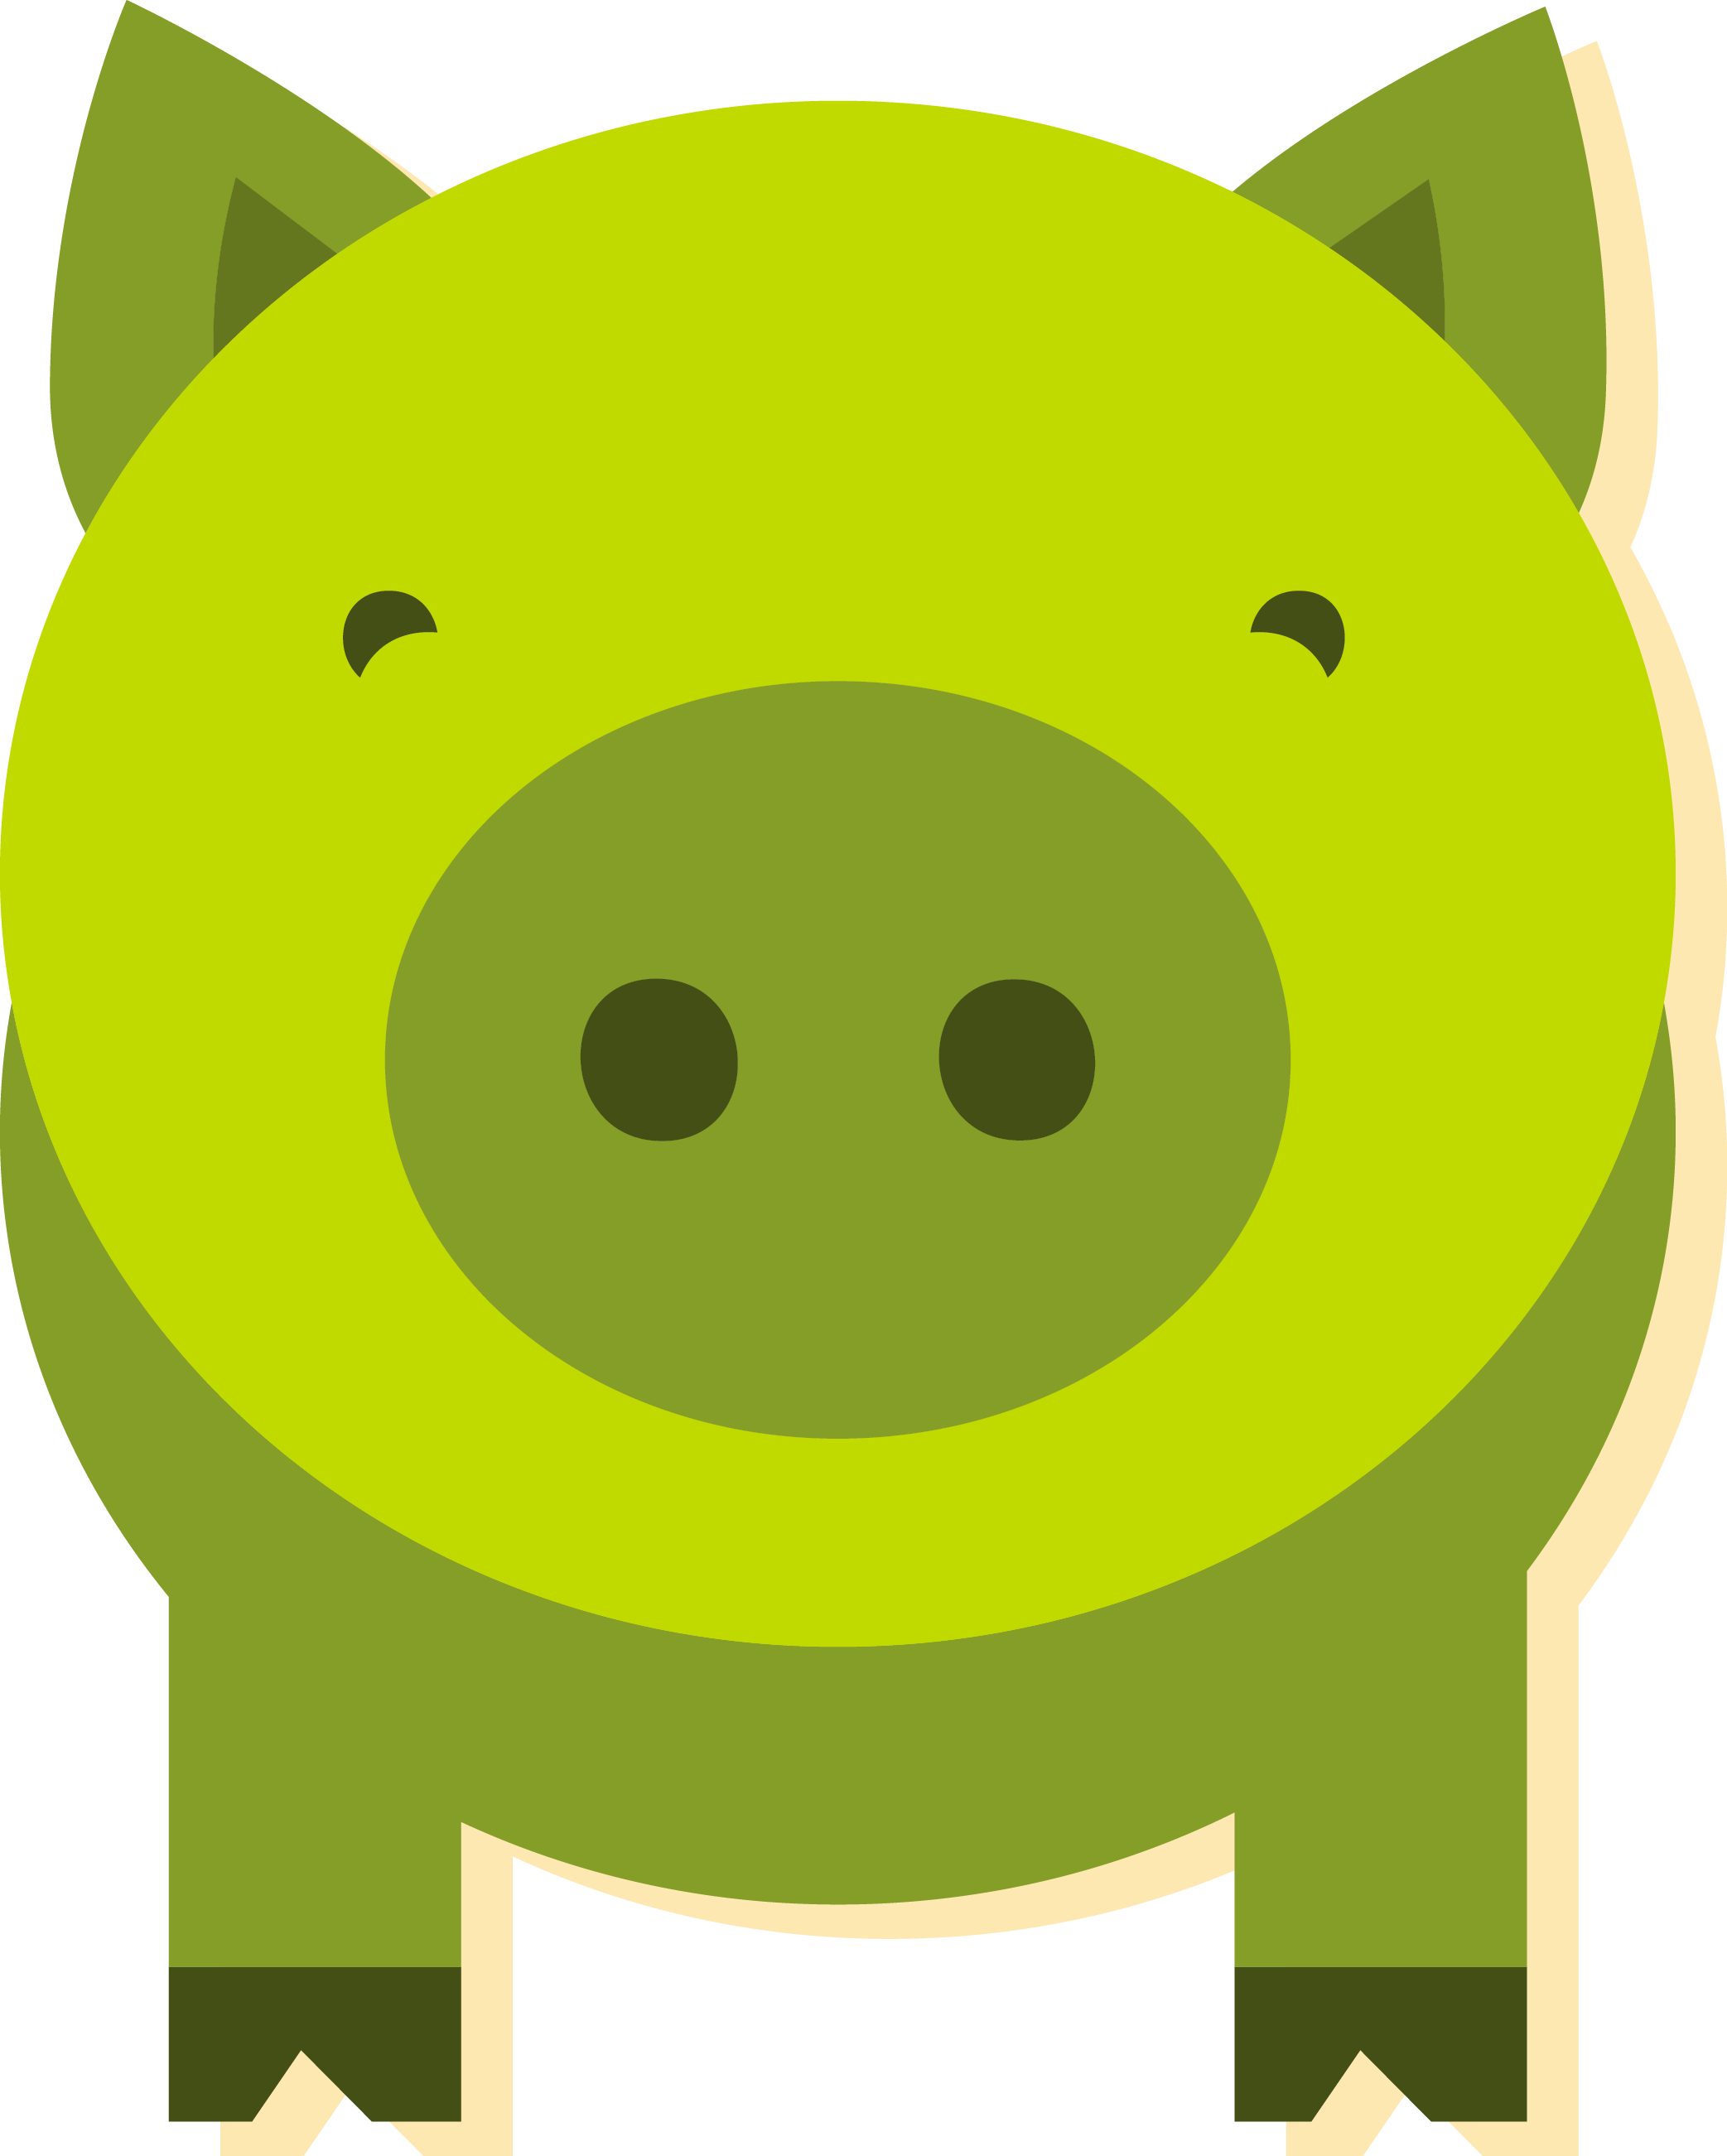 Watermelon clipart green object. Domestic pig clip art